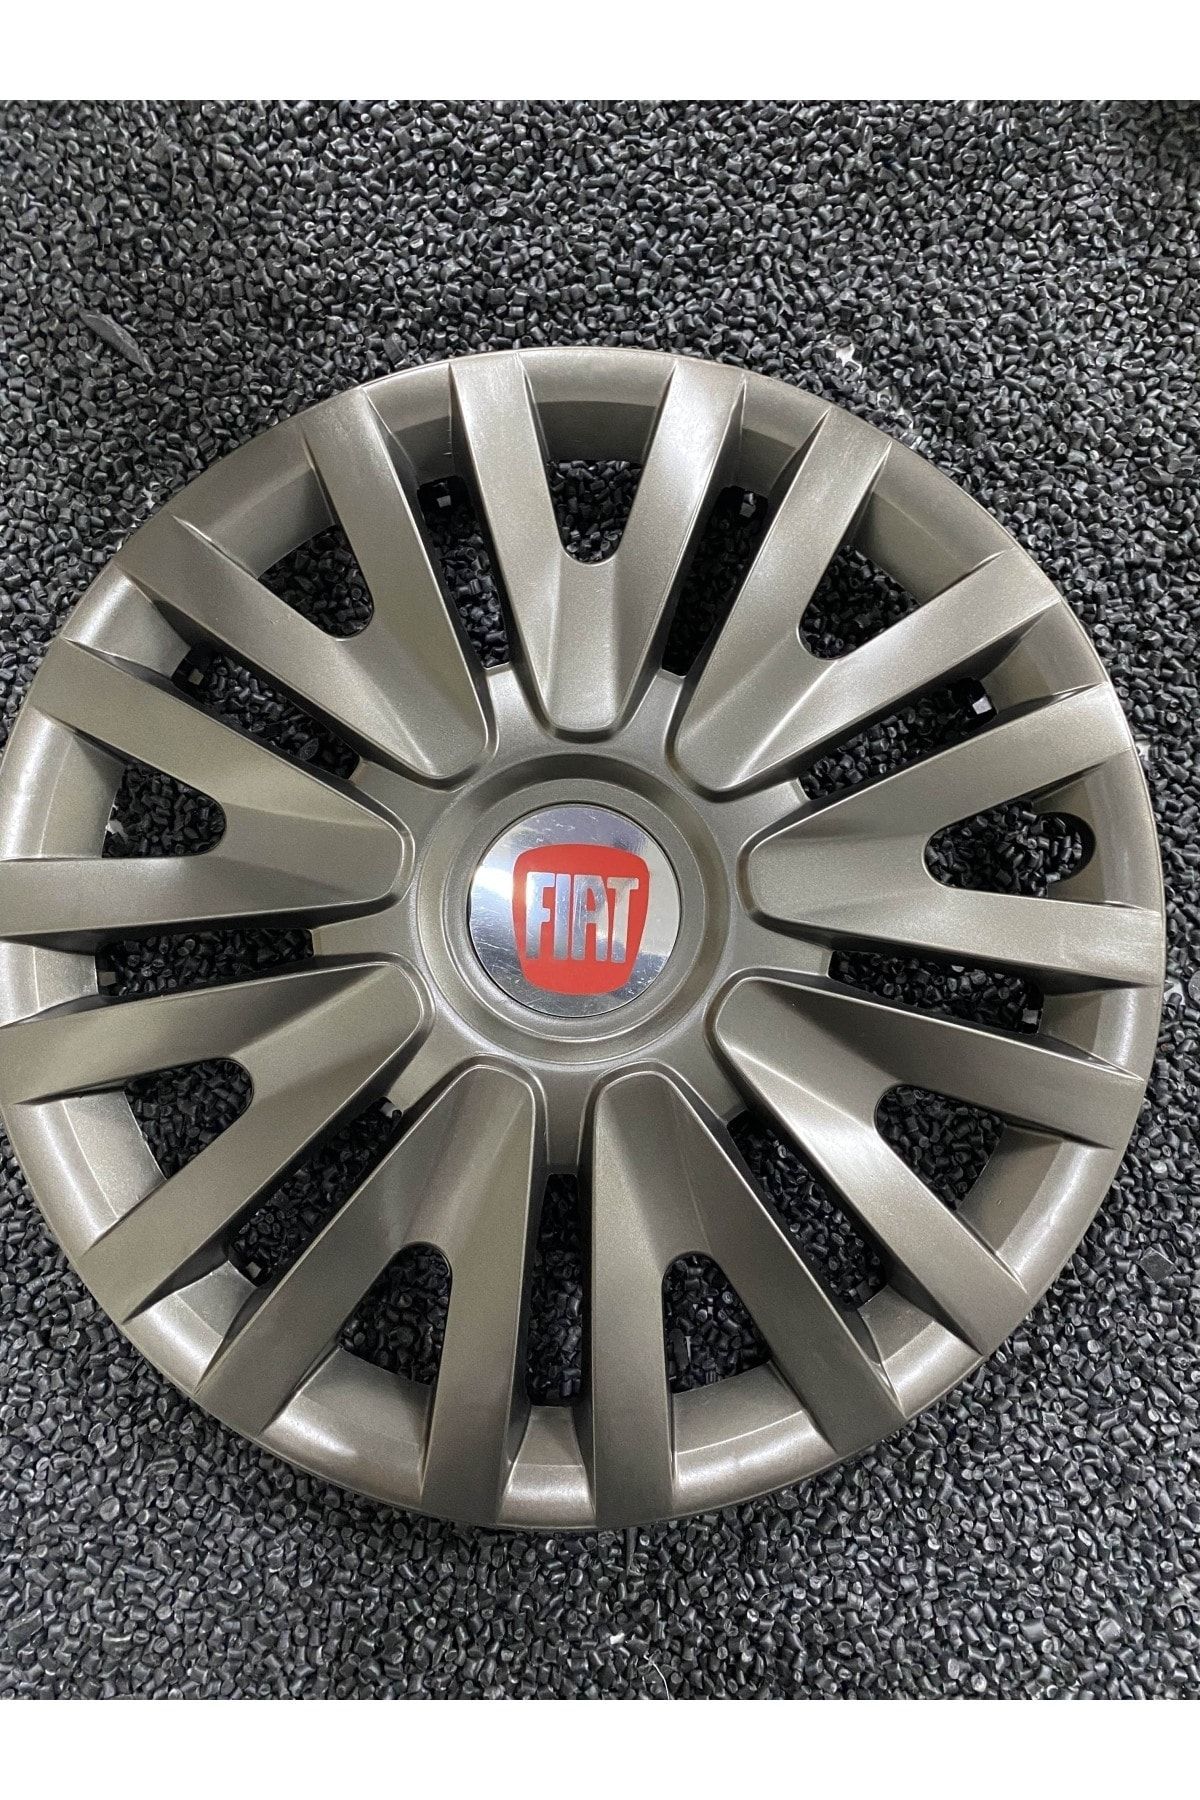 YILAPJANT Fiat Fiorino 15" Inç Kırılmaz Jant Kapağı Füme 4 Adet